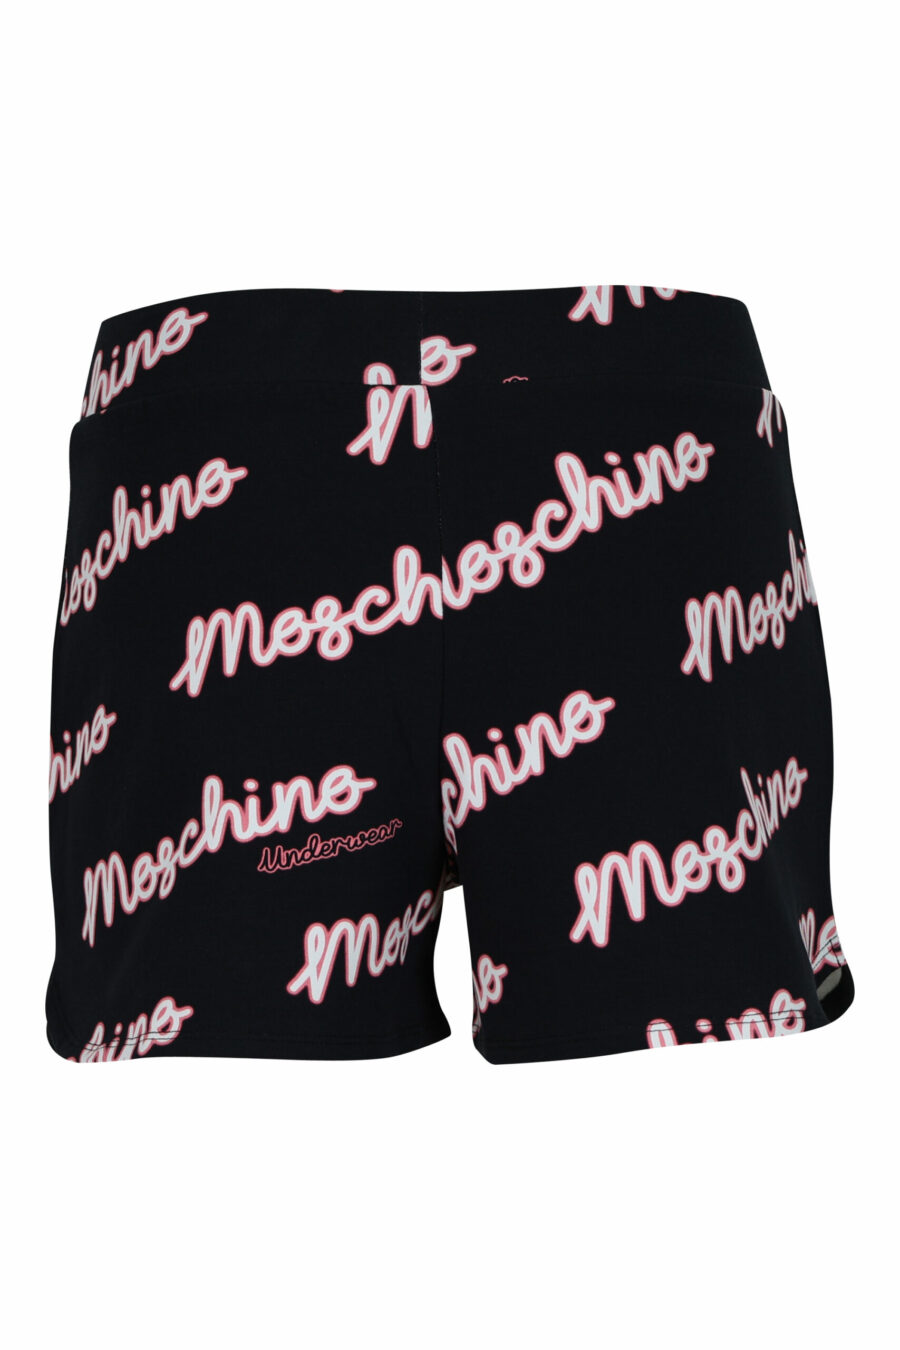 Shorts negros con "all over logo moschino" fucsia - 667113355603 1 scaled